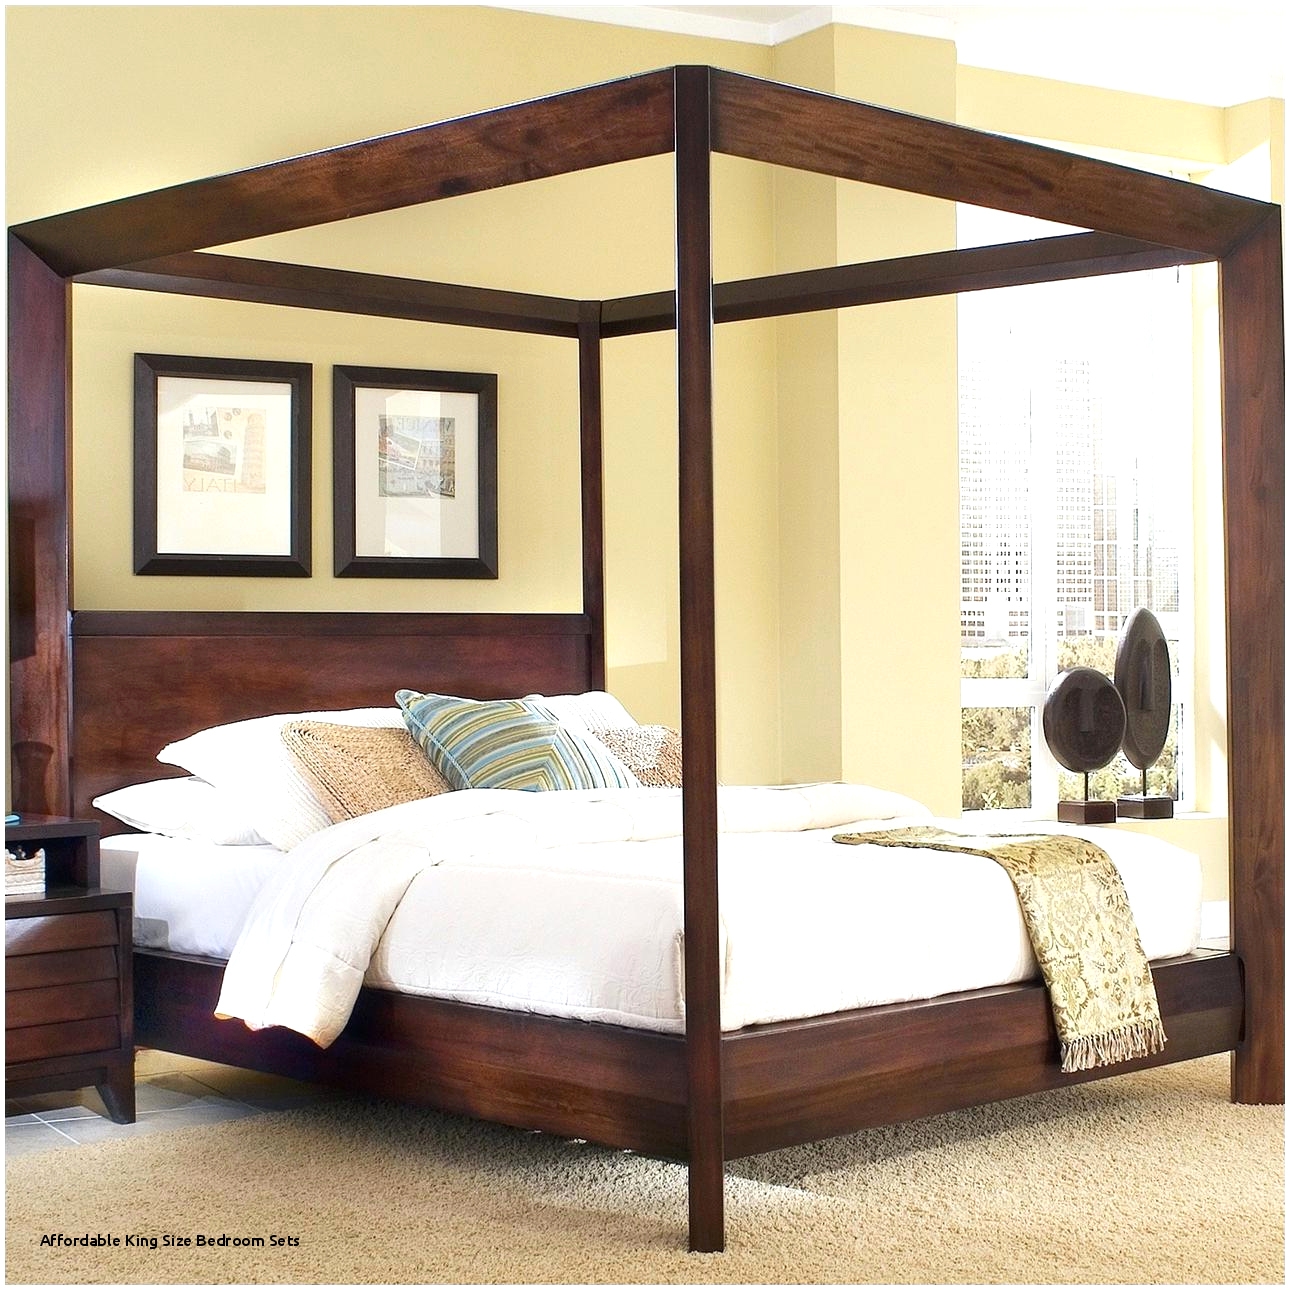 Cheap Full Size Bedroom Sets Beautiful Bedroom Design 0d Archives Best Affordable King Size Bedroom